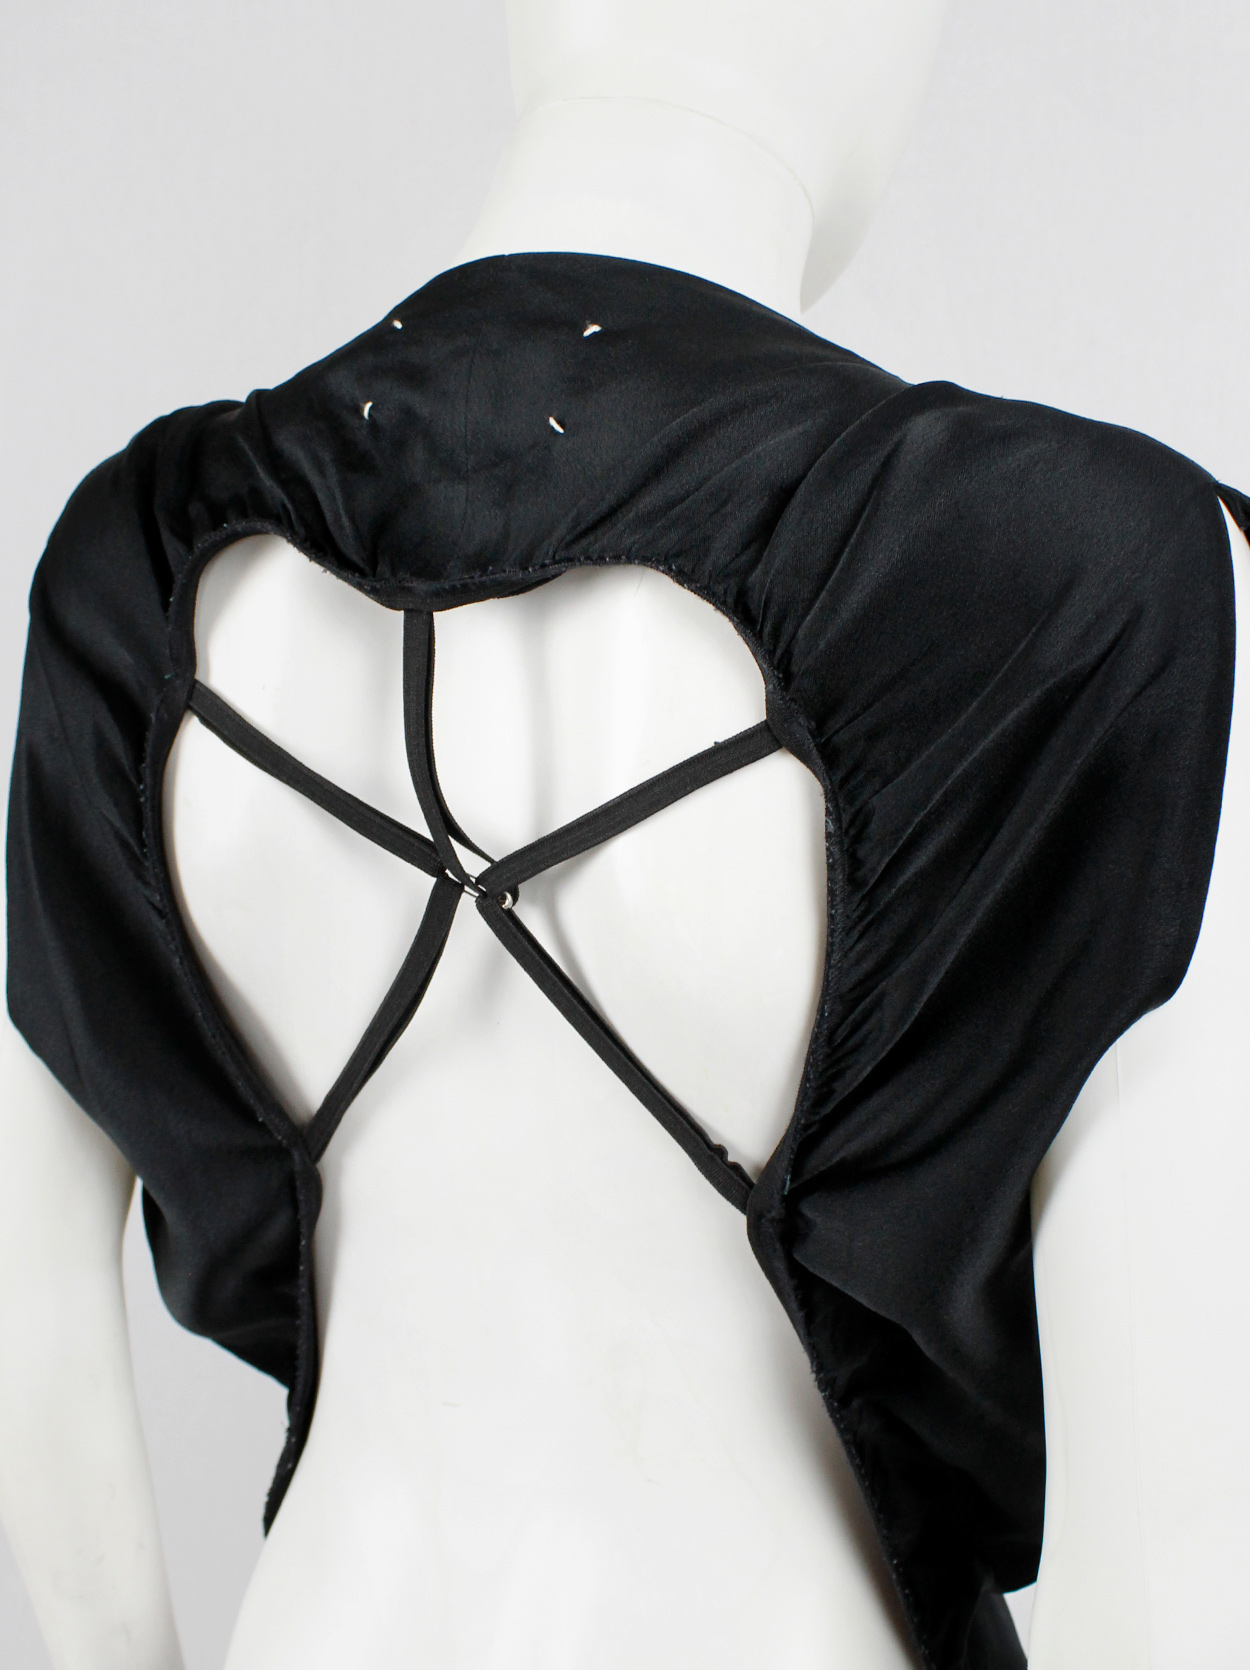 Maison Martin Margiela black backless dress with straps modeled after a ...